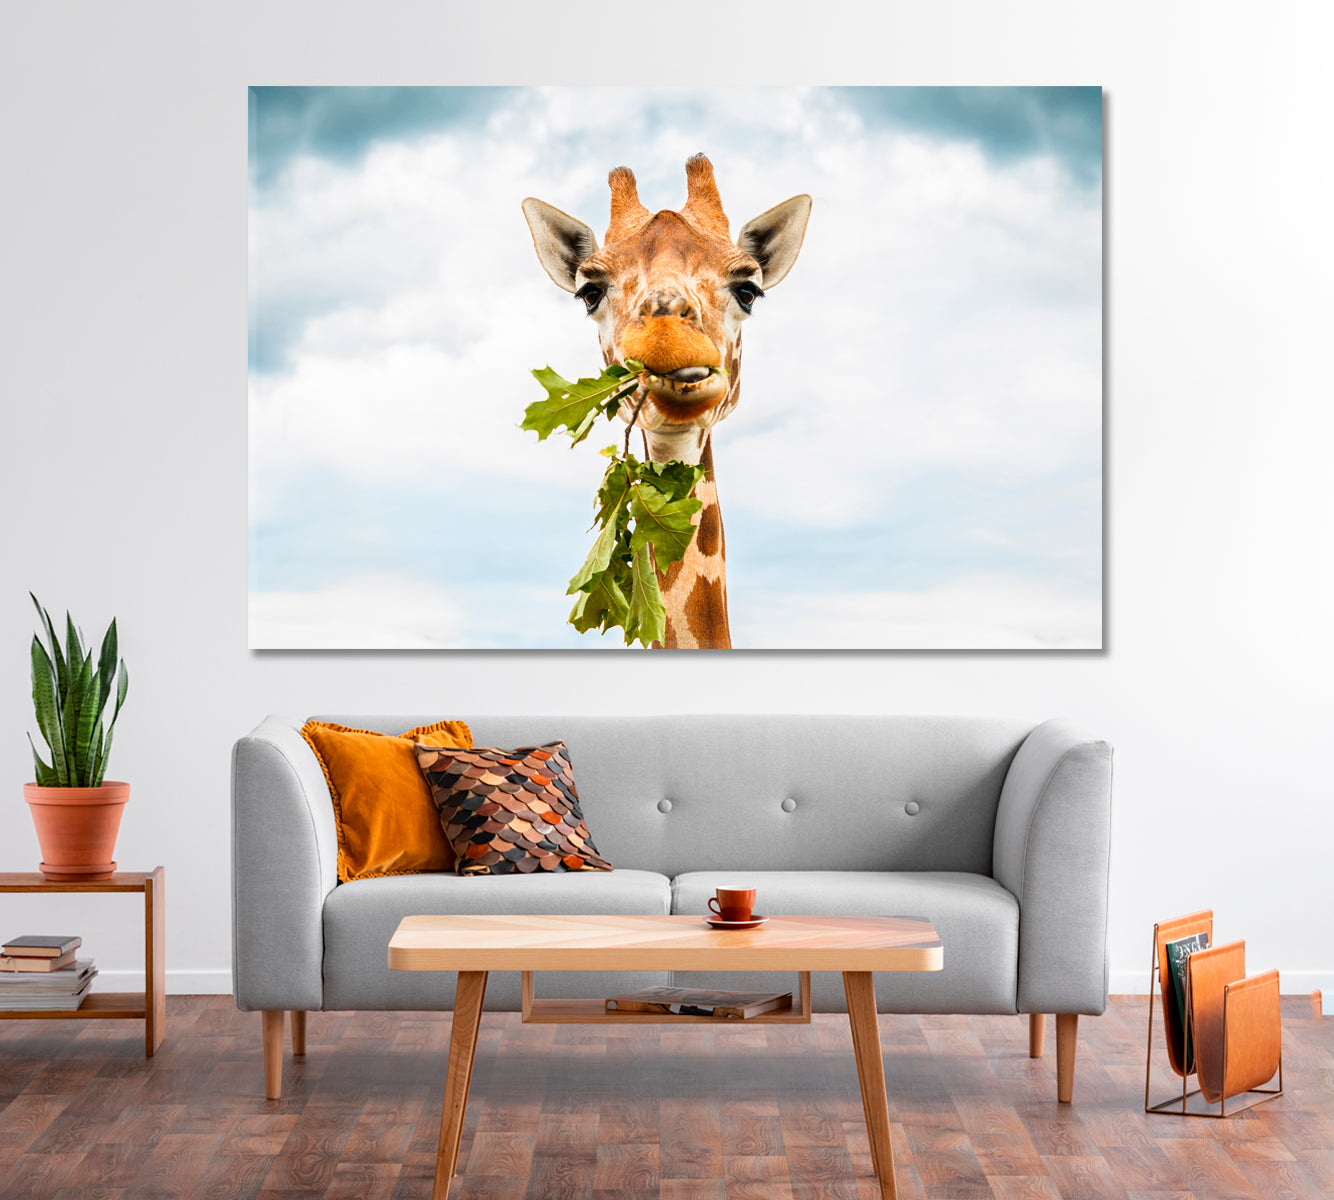 Giraffe Eating Leaves Canvas Print-Canvas Print-CetArt-1 Panel-24x16 inches-CetArt